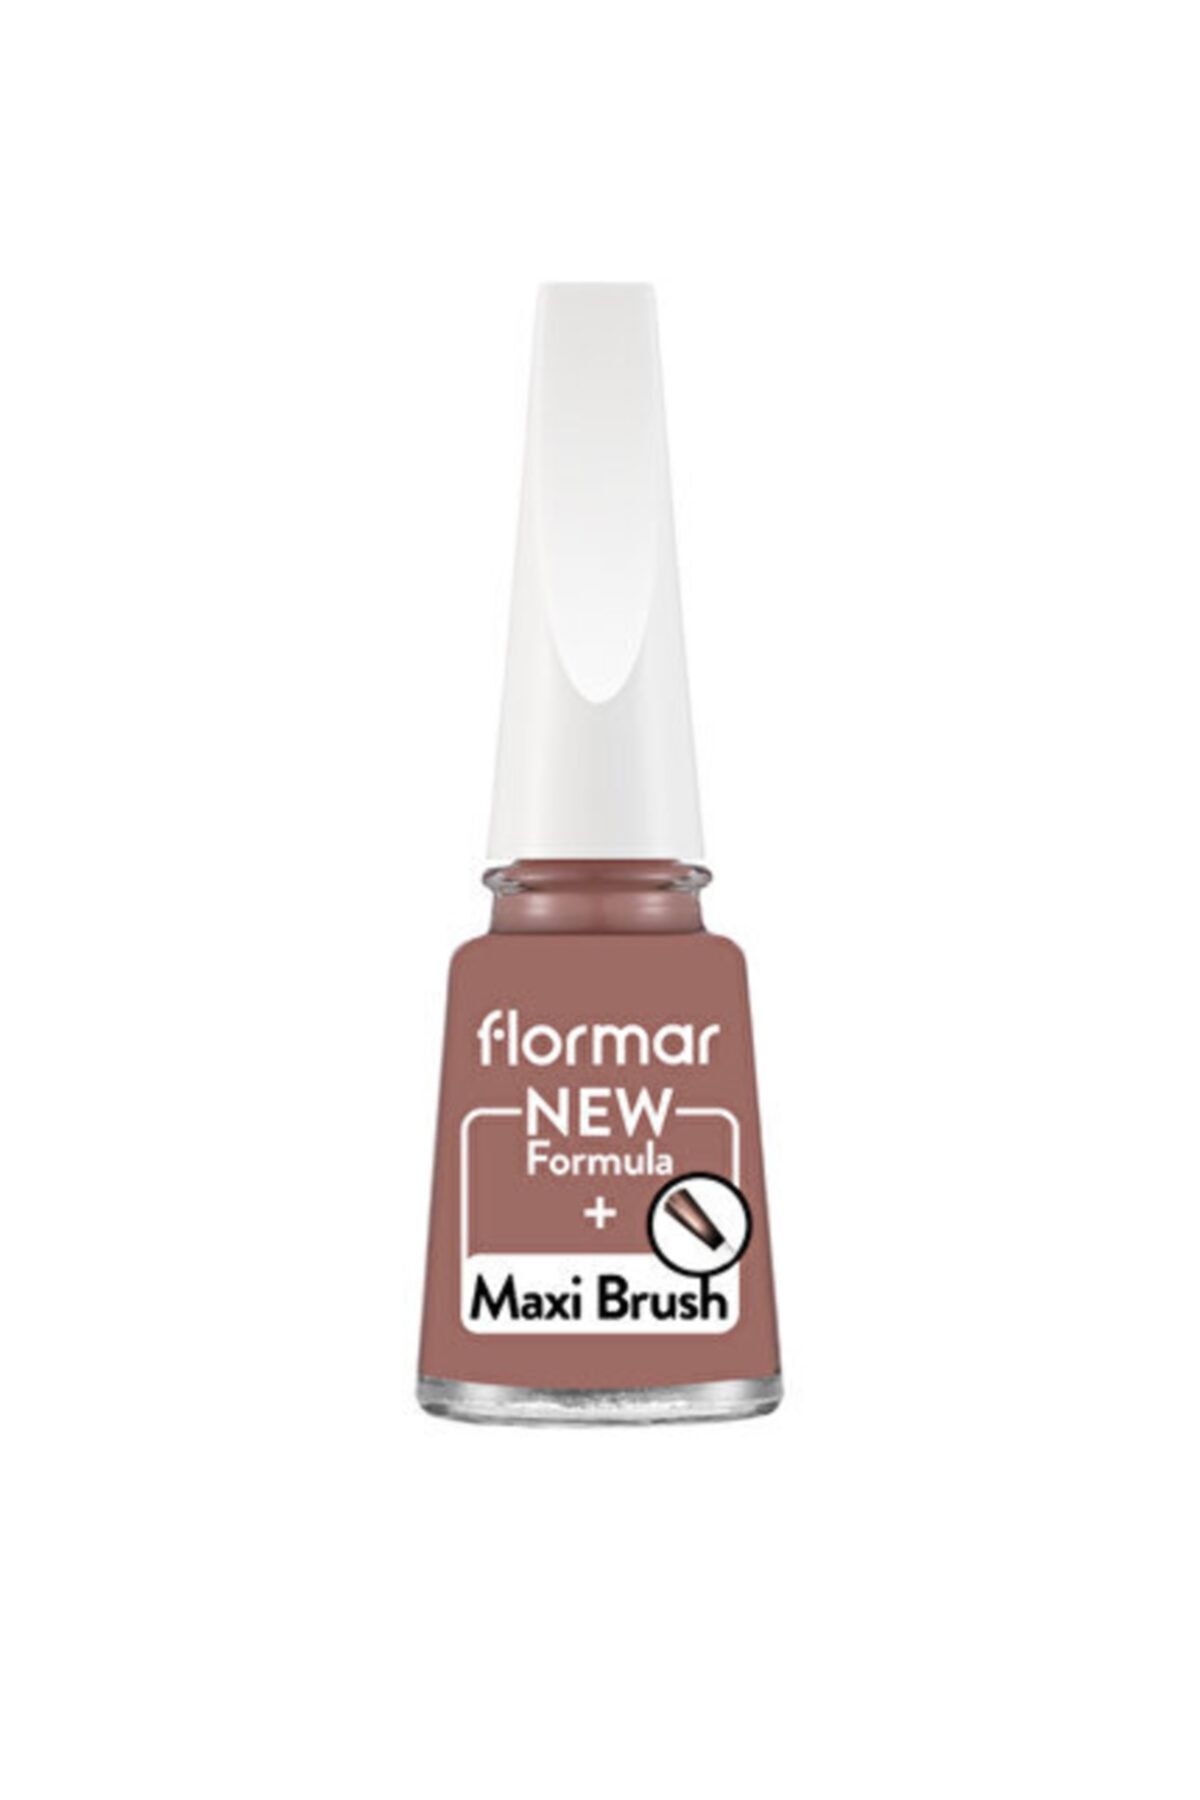 Flormar رنگ ناخن 499: رنگ ناخن فلورمار با پوشش مات